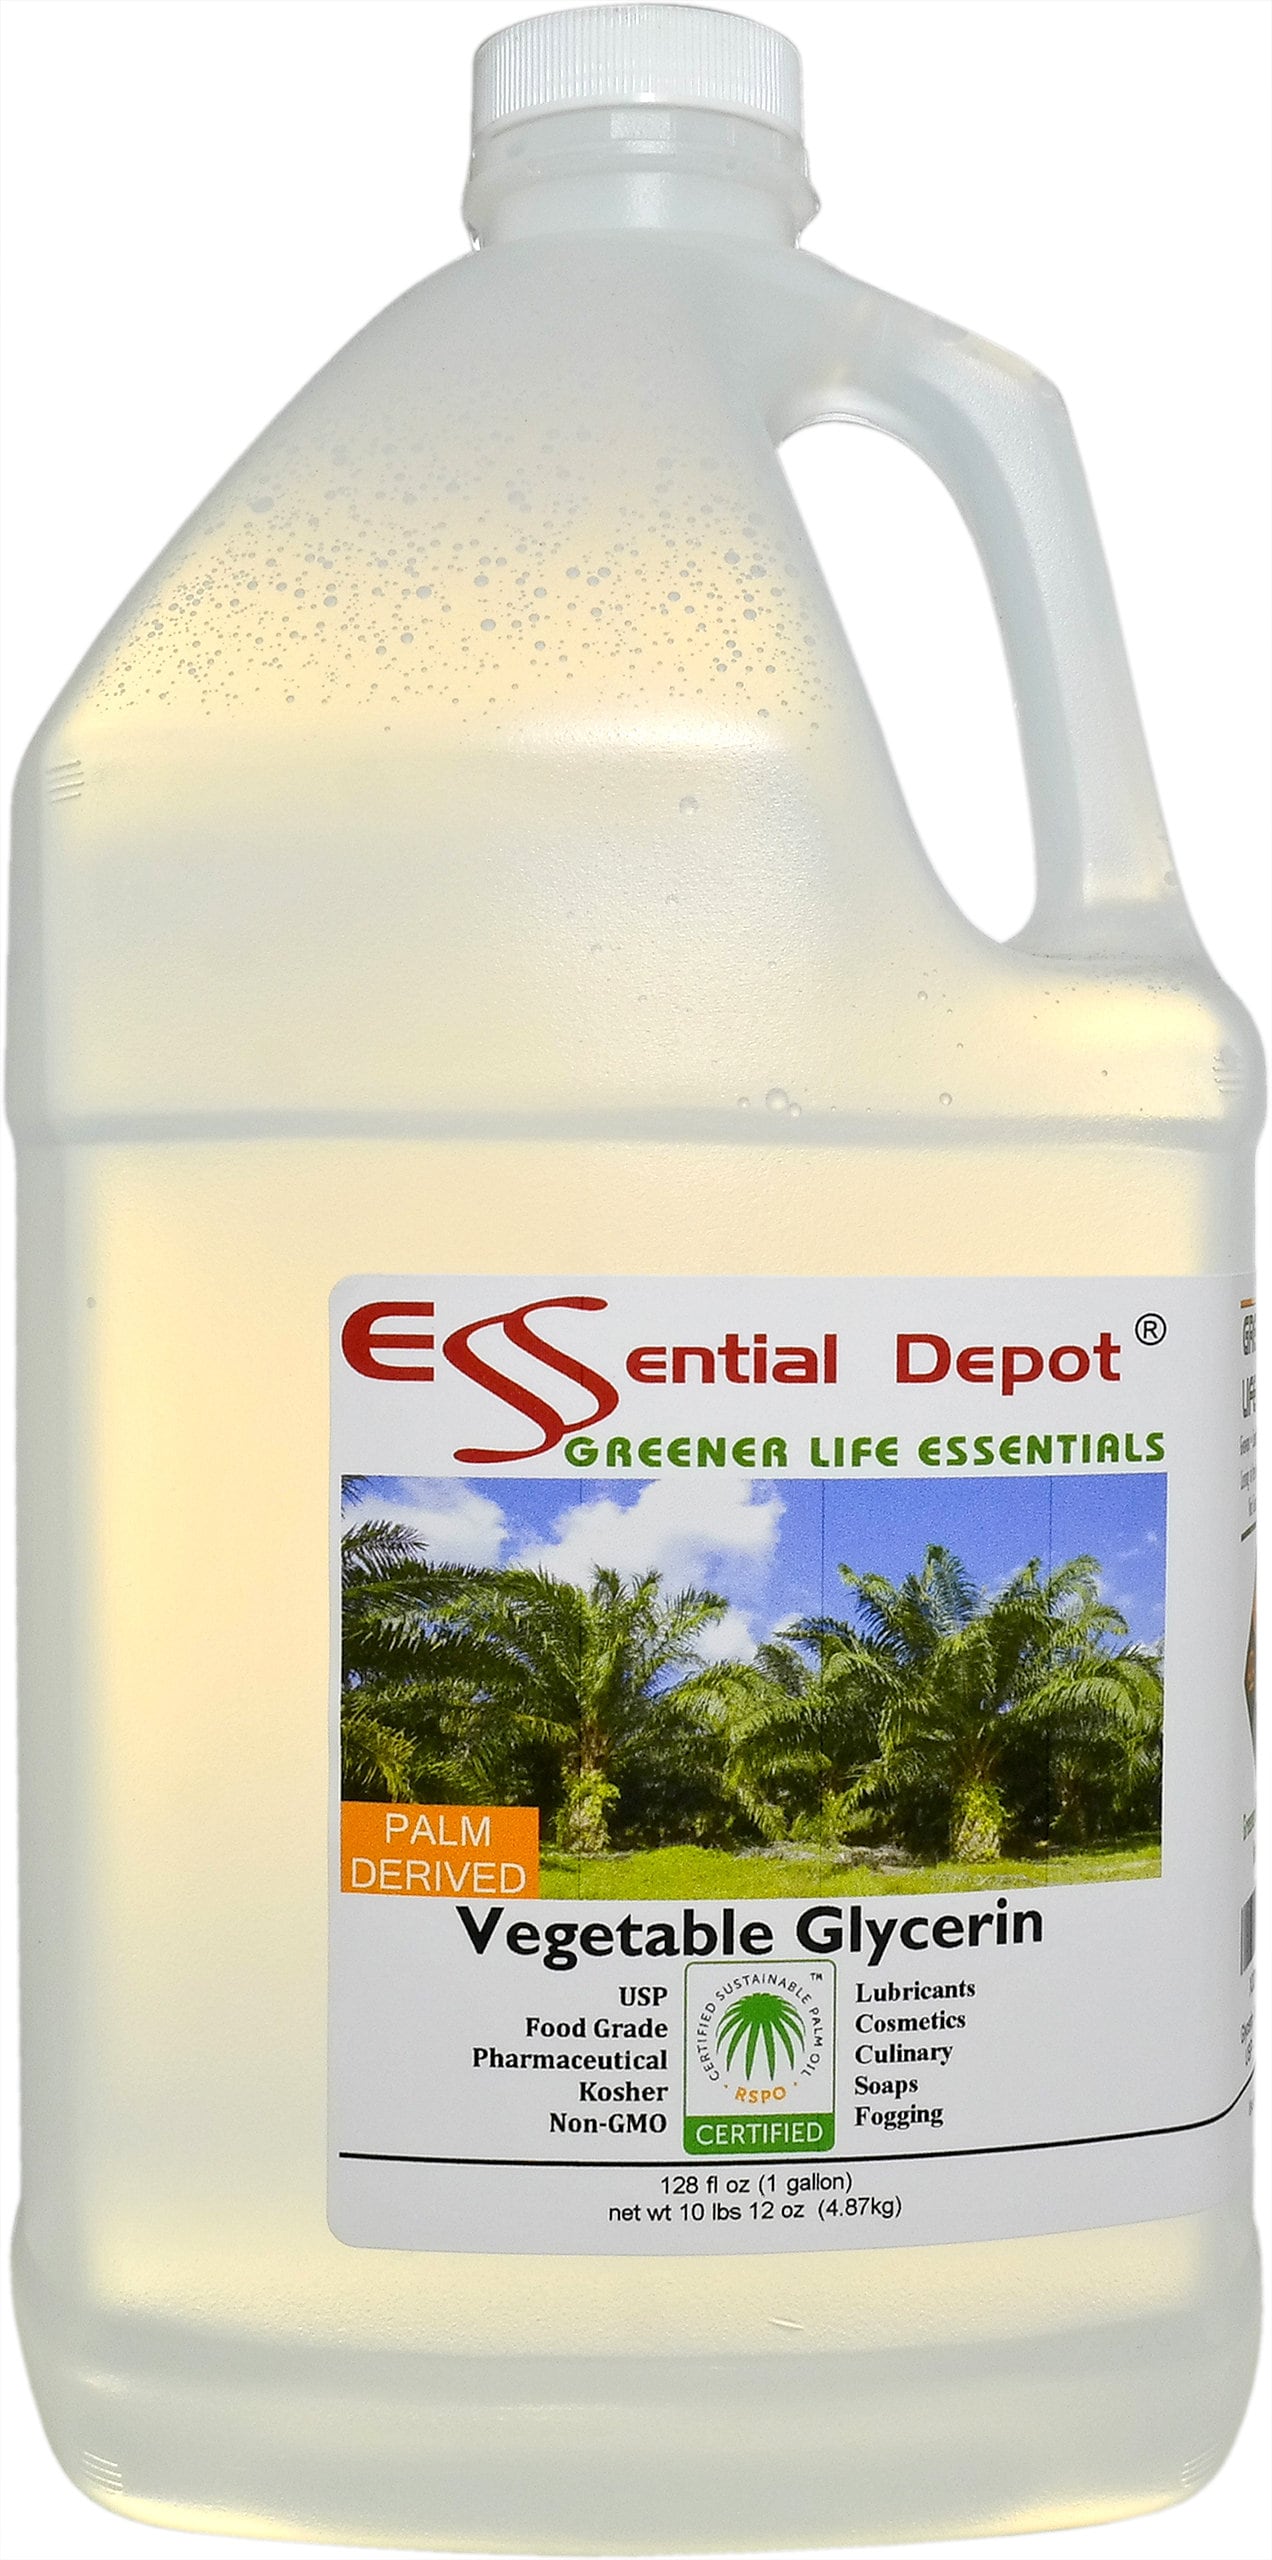 Sodium Hydroxide Lye Micro Beads - Food Grade - USP - 16 lbs - 8 x 2lb  Bottles: Essential Depot